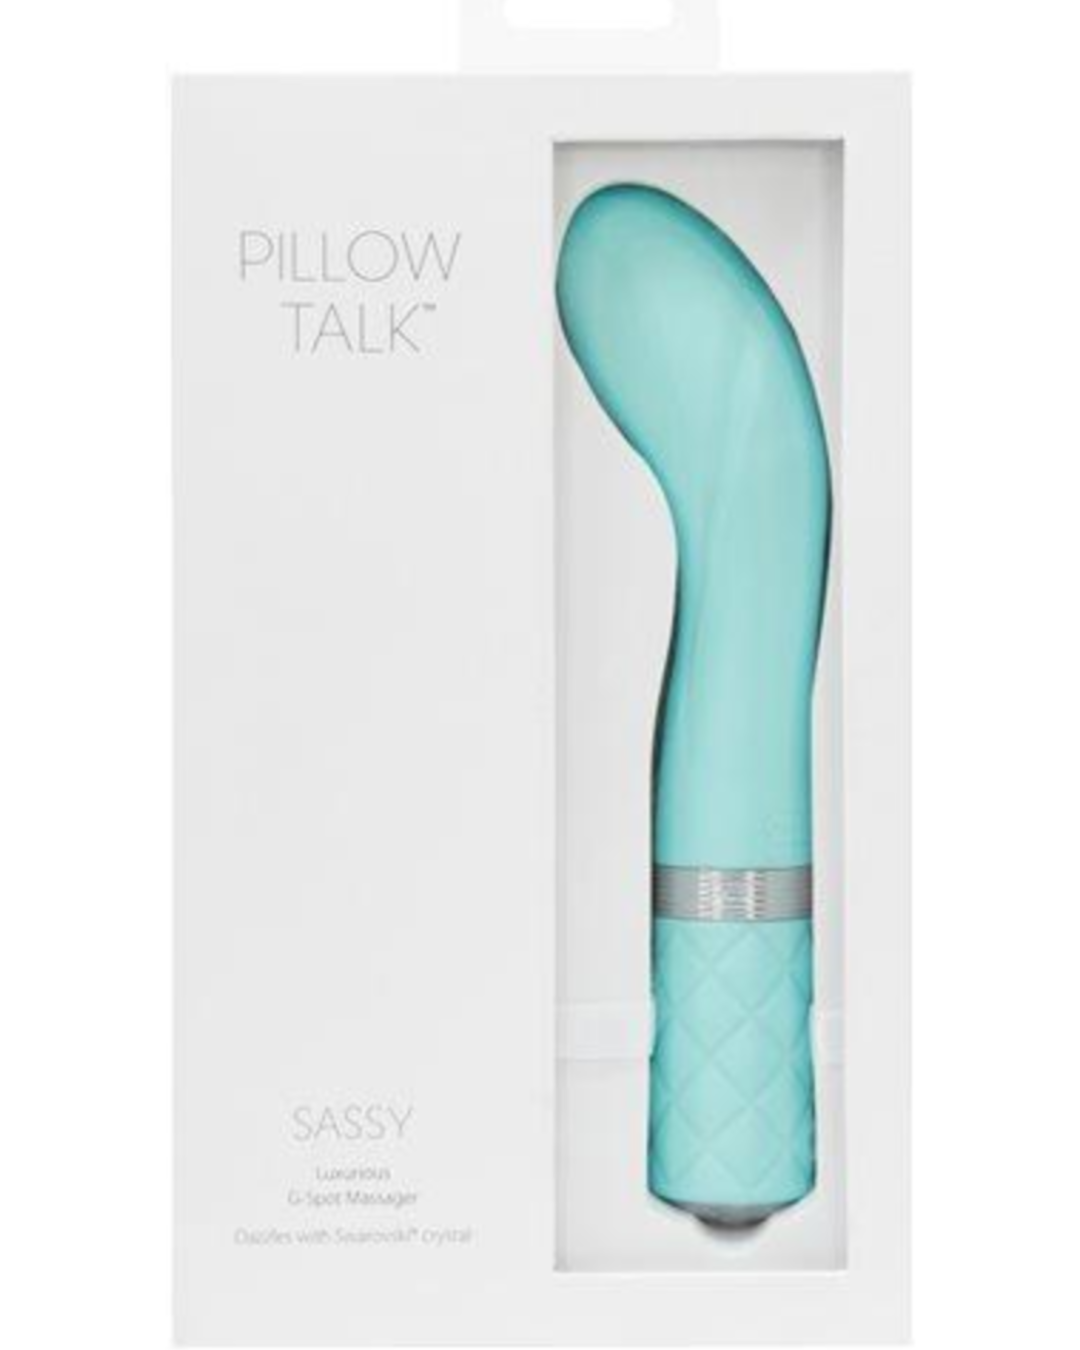 Pillow Talk Sassy G-spot Vibrator by BMS - Teal box